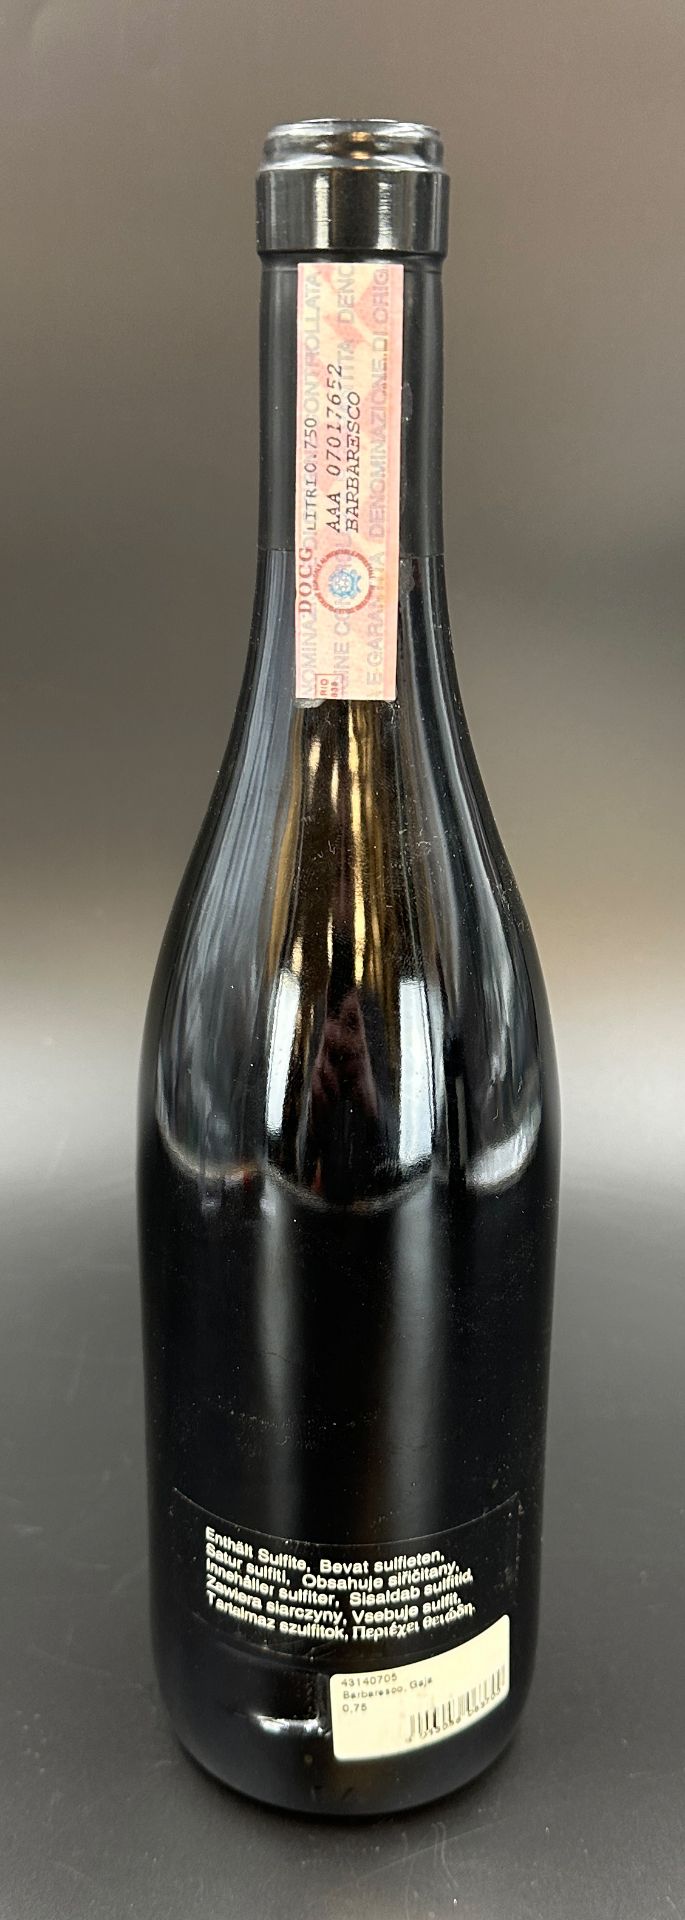 GAJA. Barbaresco. 1 bottle of red wine. 2005. - Image 4 of 10